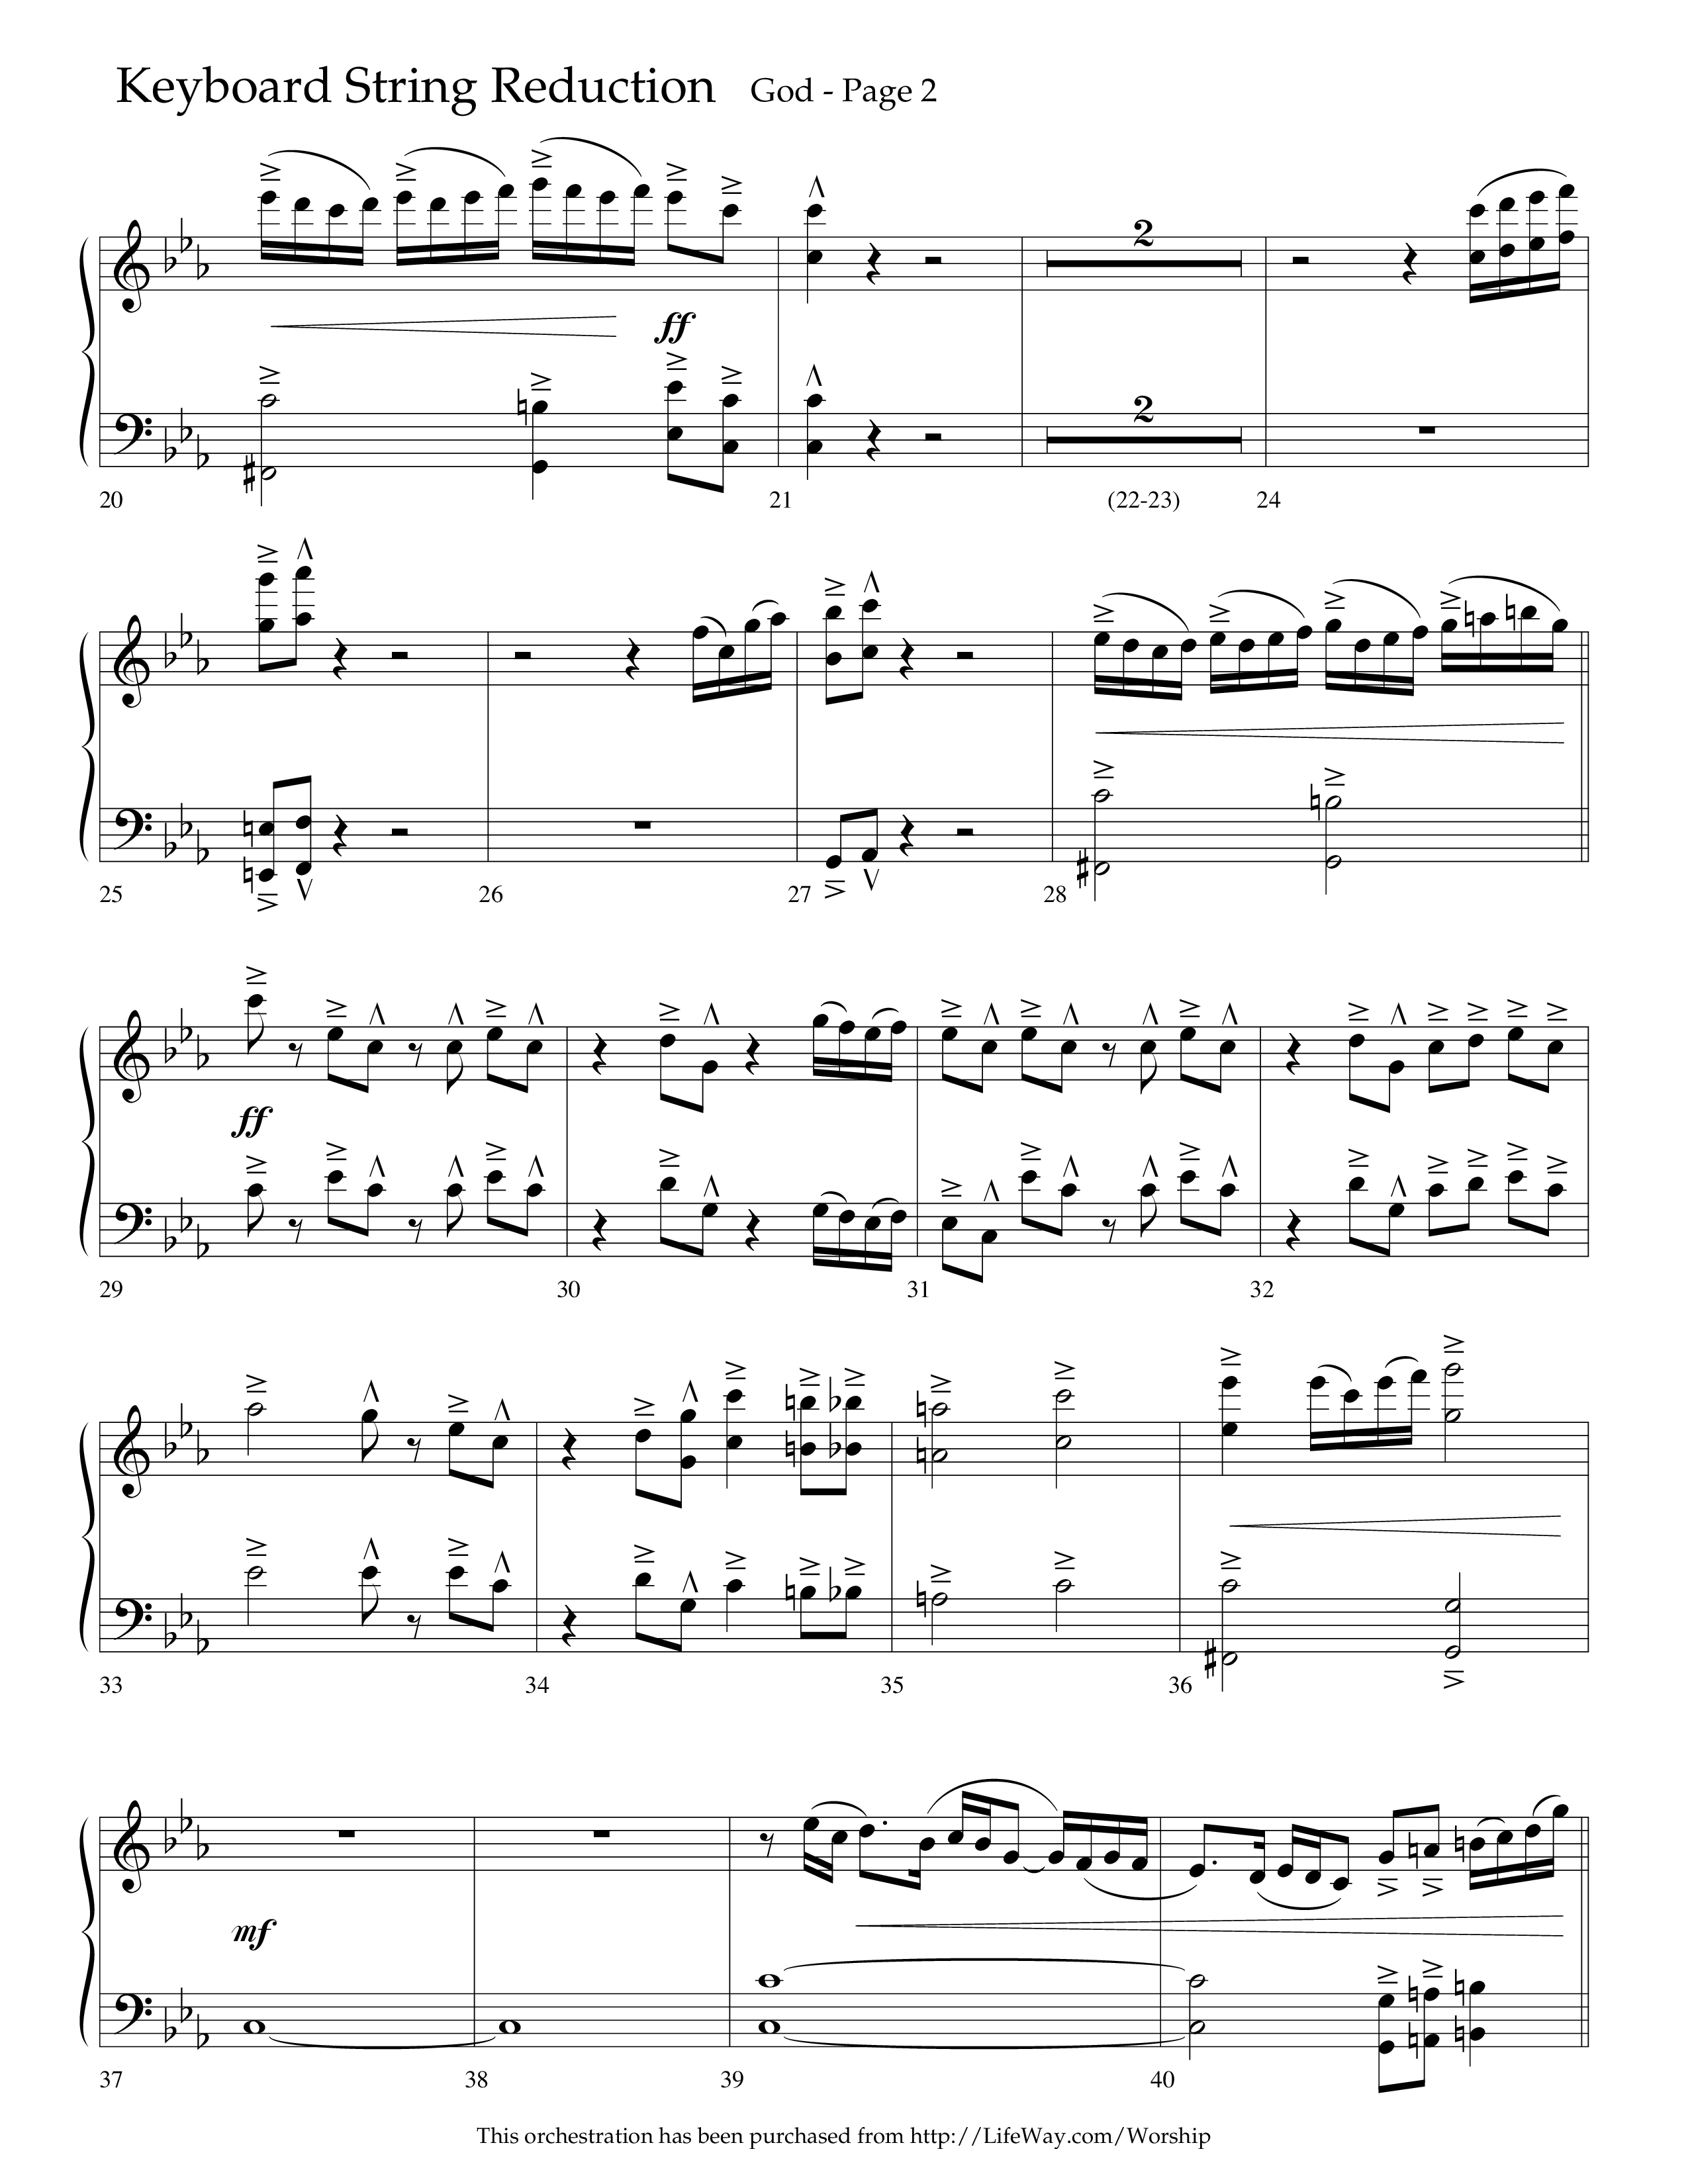 God (Choral Anthem SATB) String Reduction (Lifeway Choral / Arr. Cliff Duren)